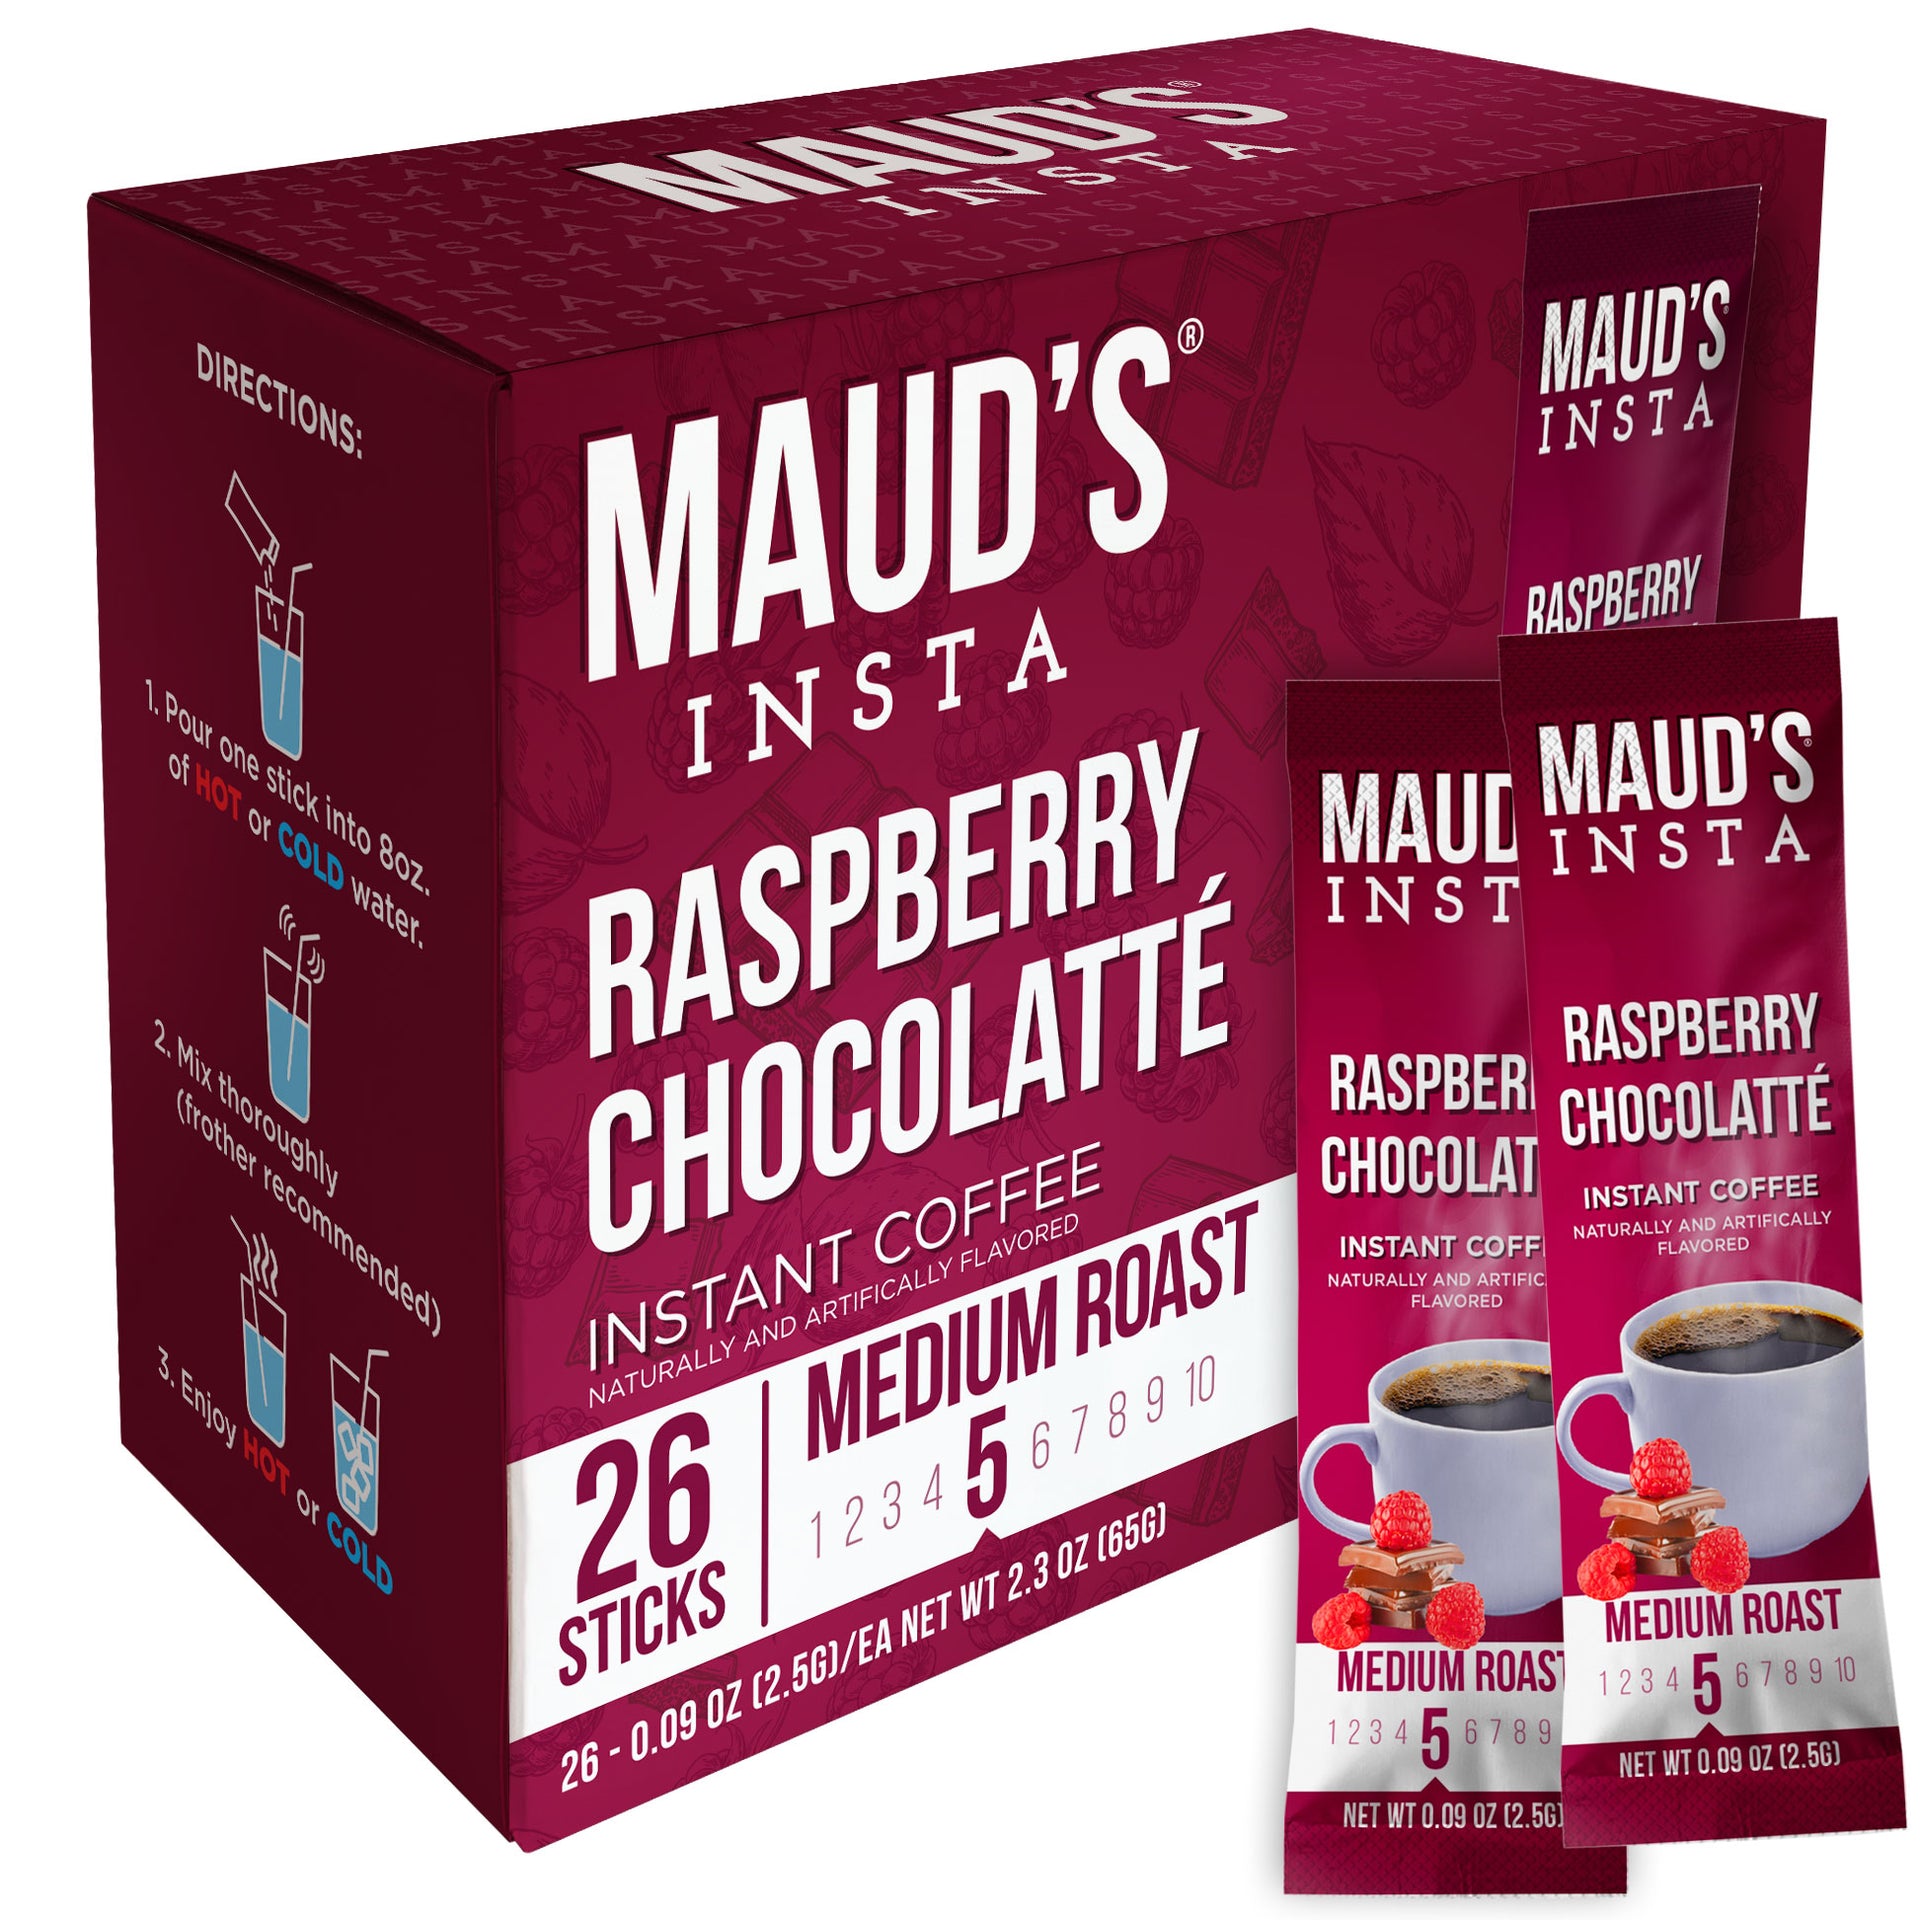 Maud's Instant Raspberry Chocolate Flavored Coffee